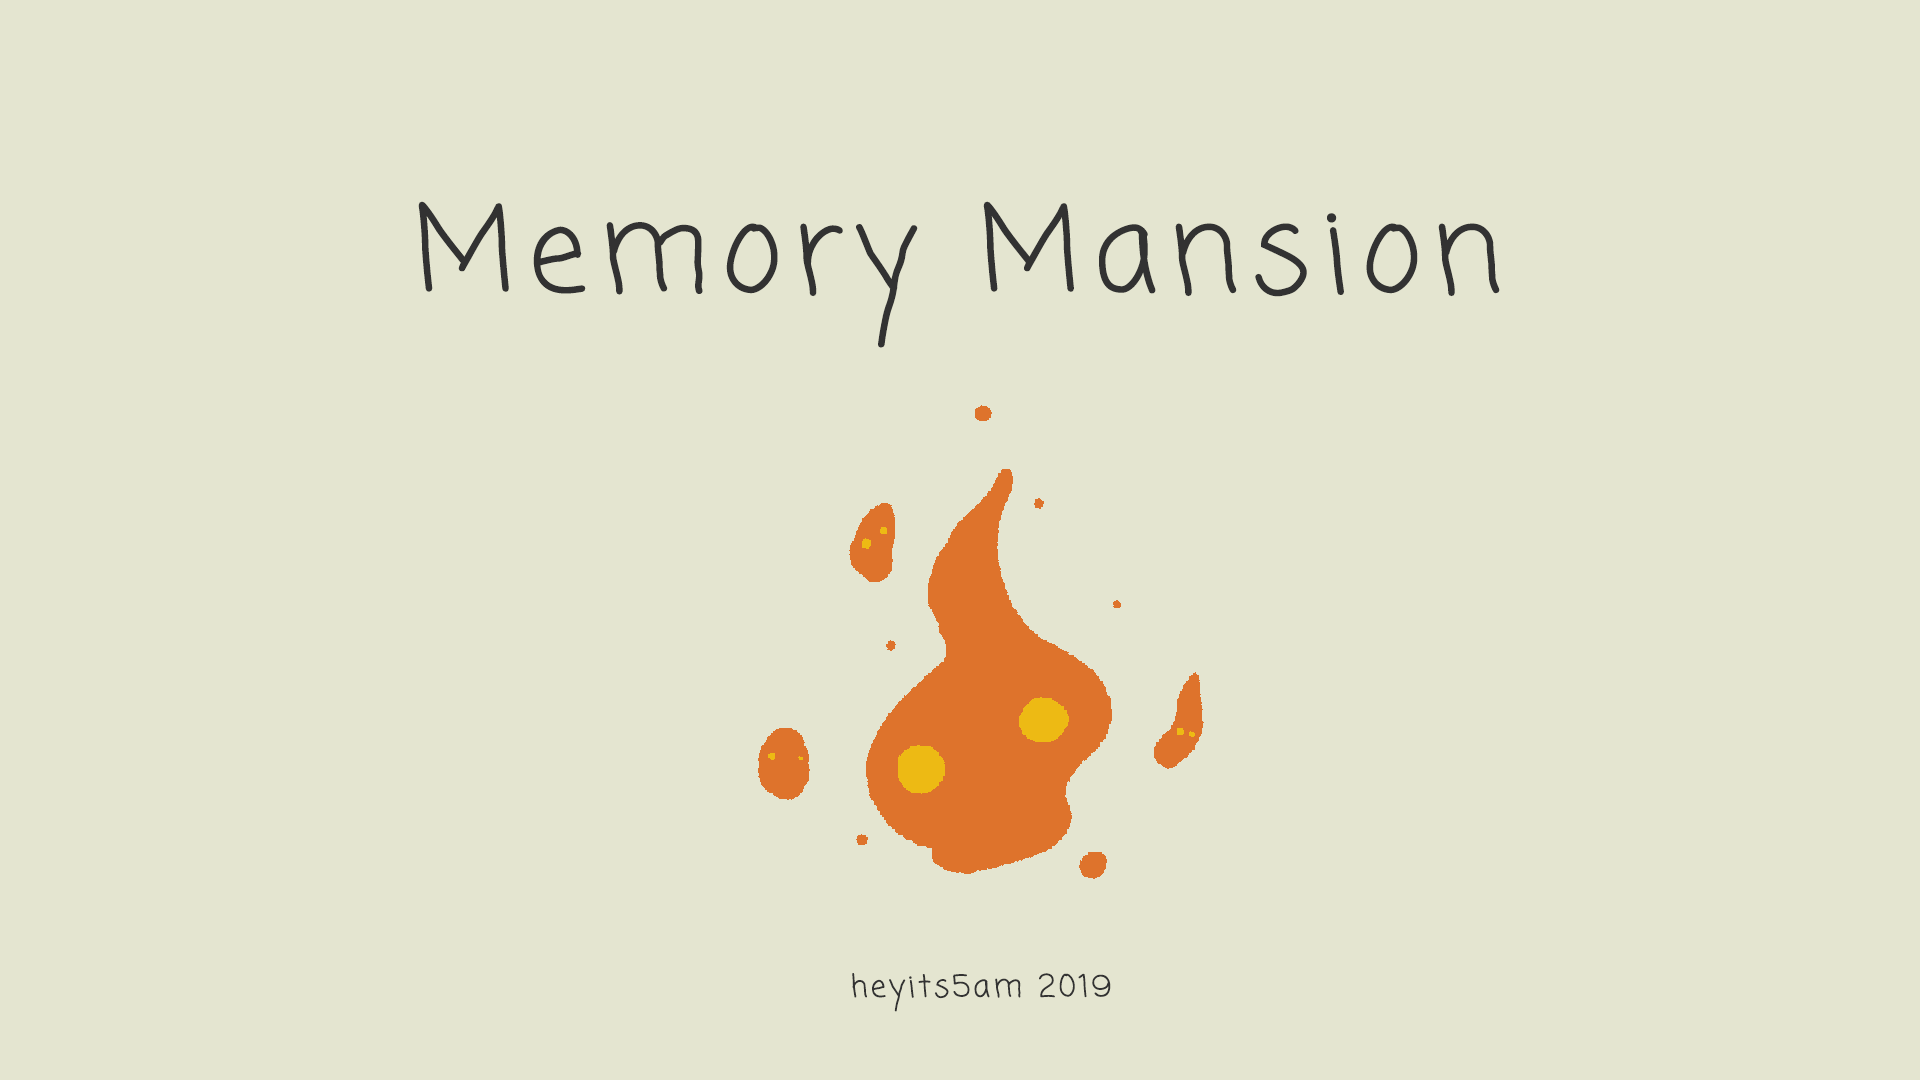 Memory Mansion